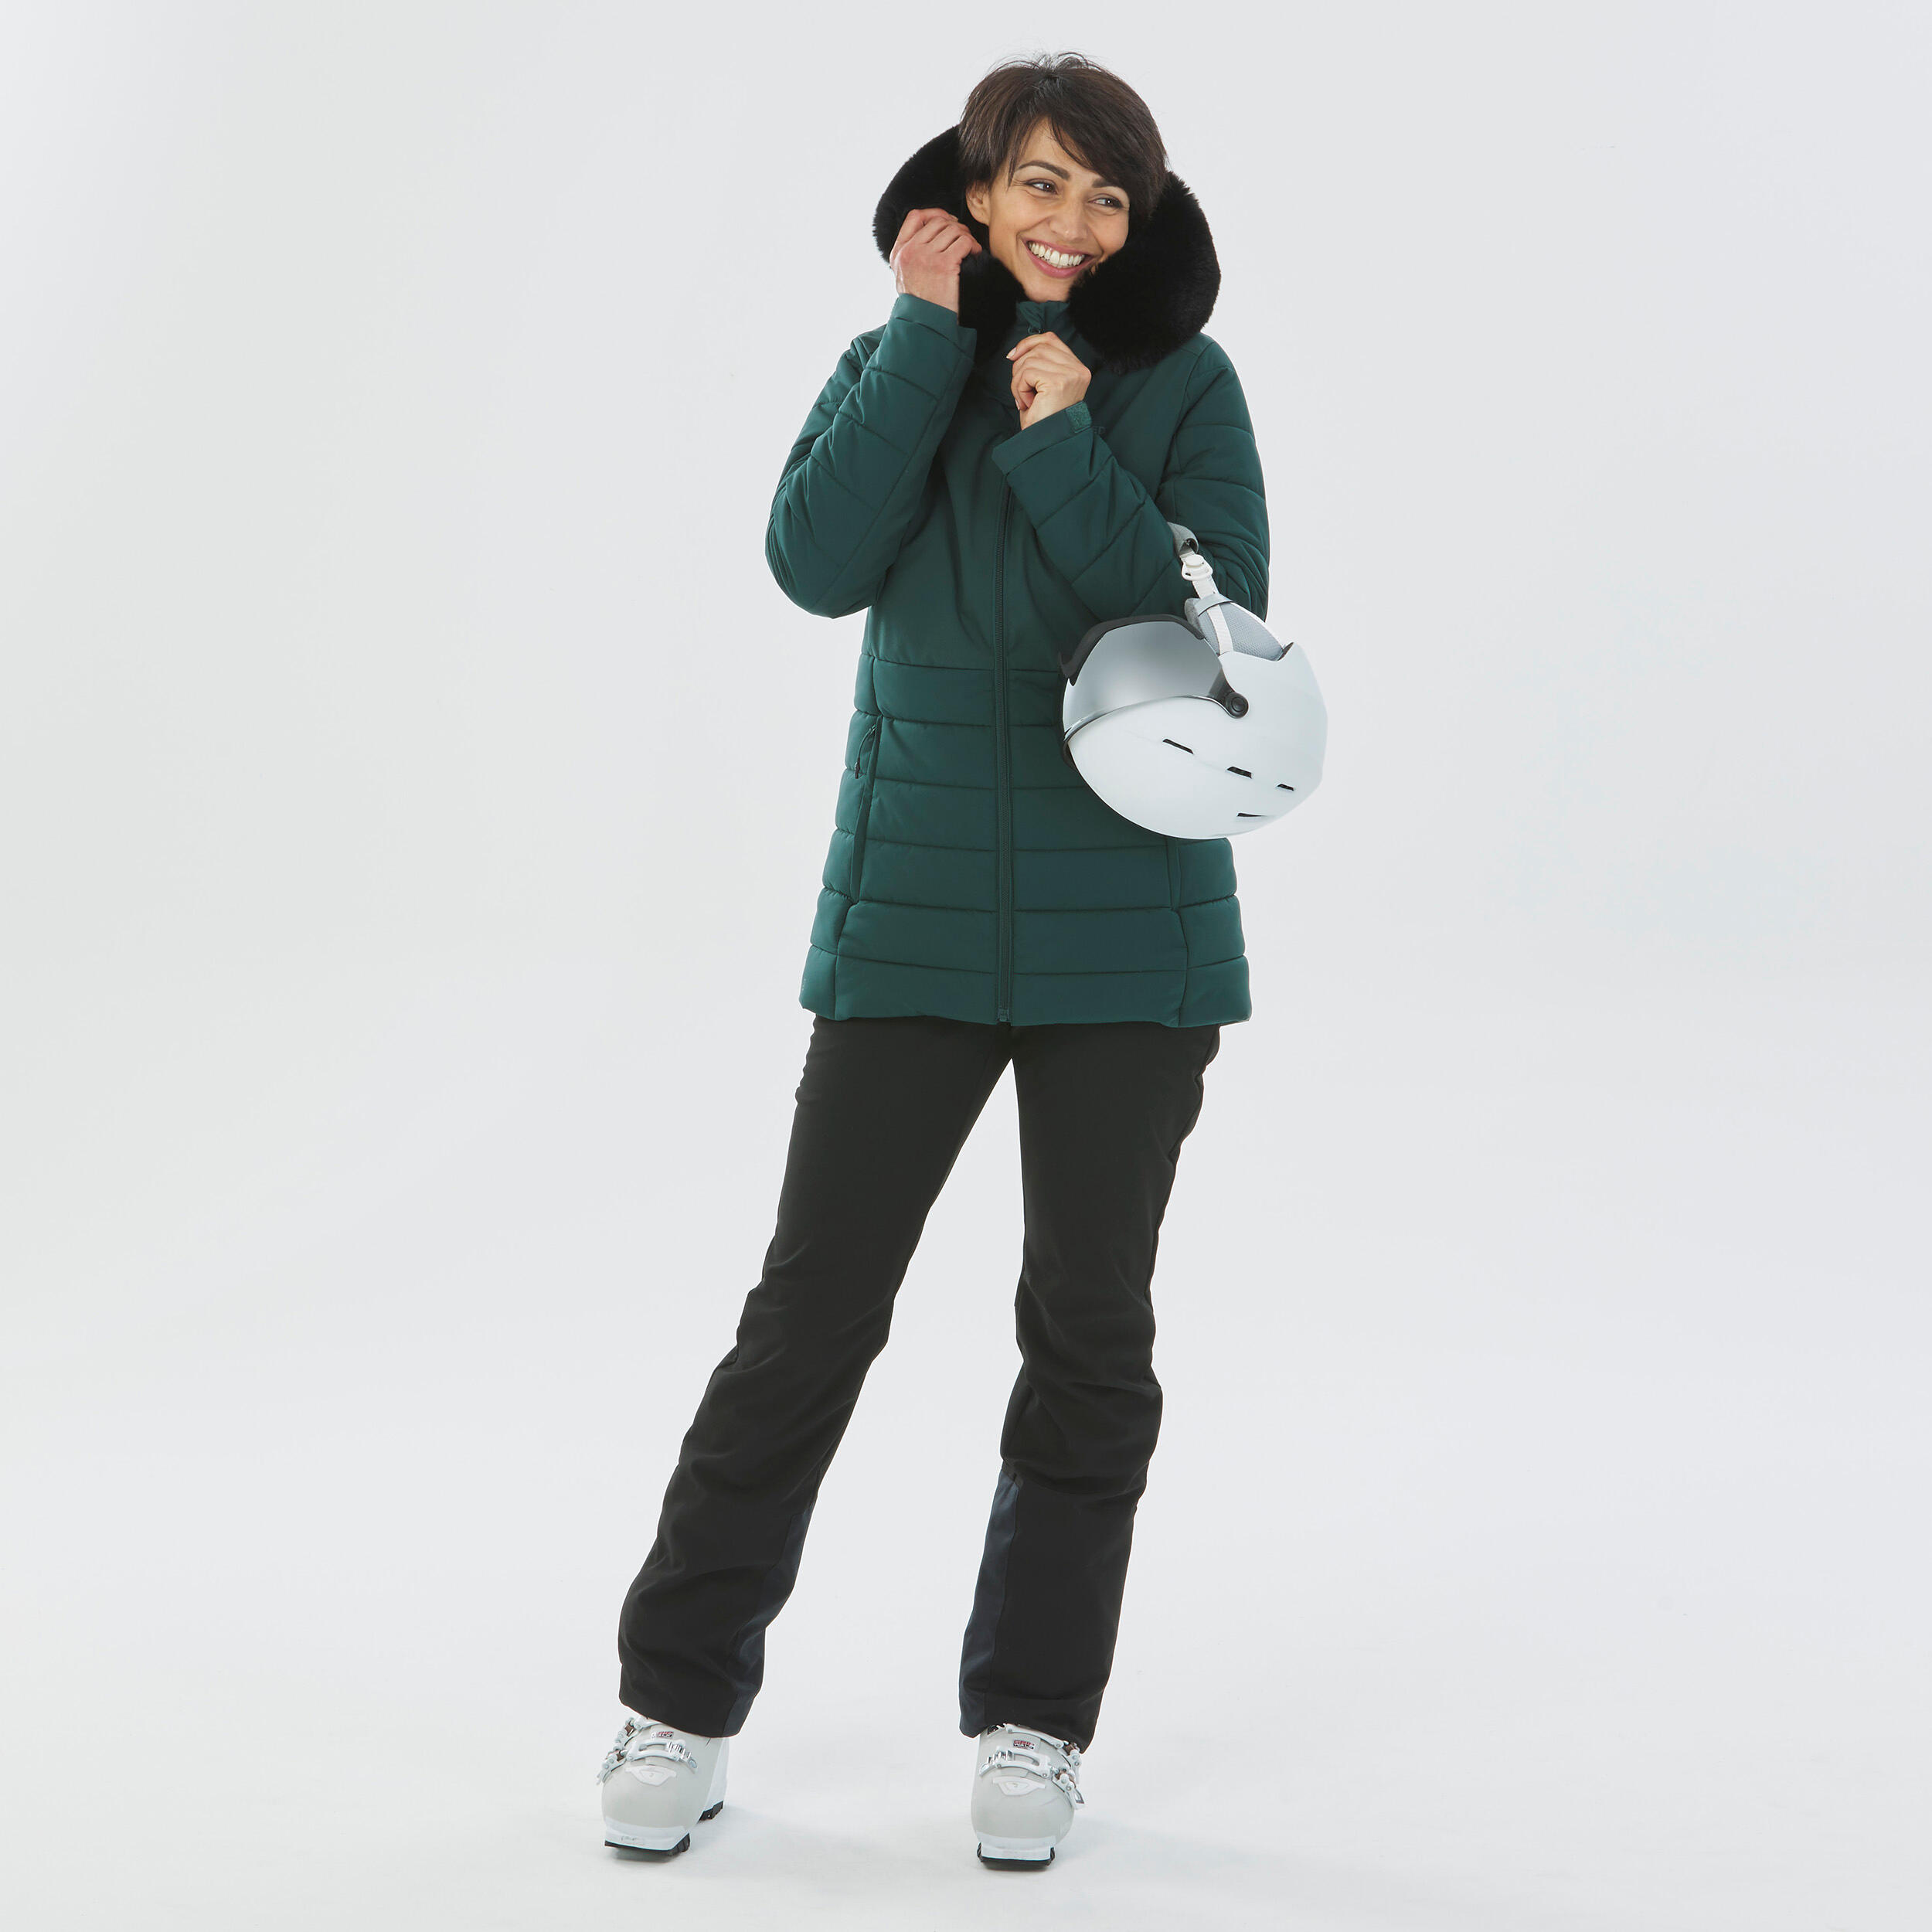 Women's Mid-Length Warm Ski Jacket 100 - Green 6/12